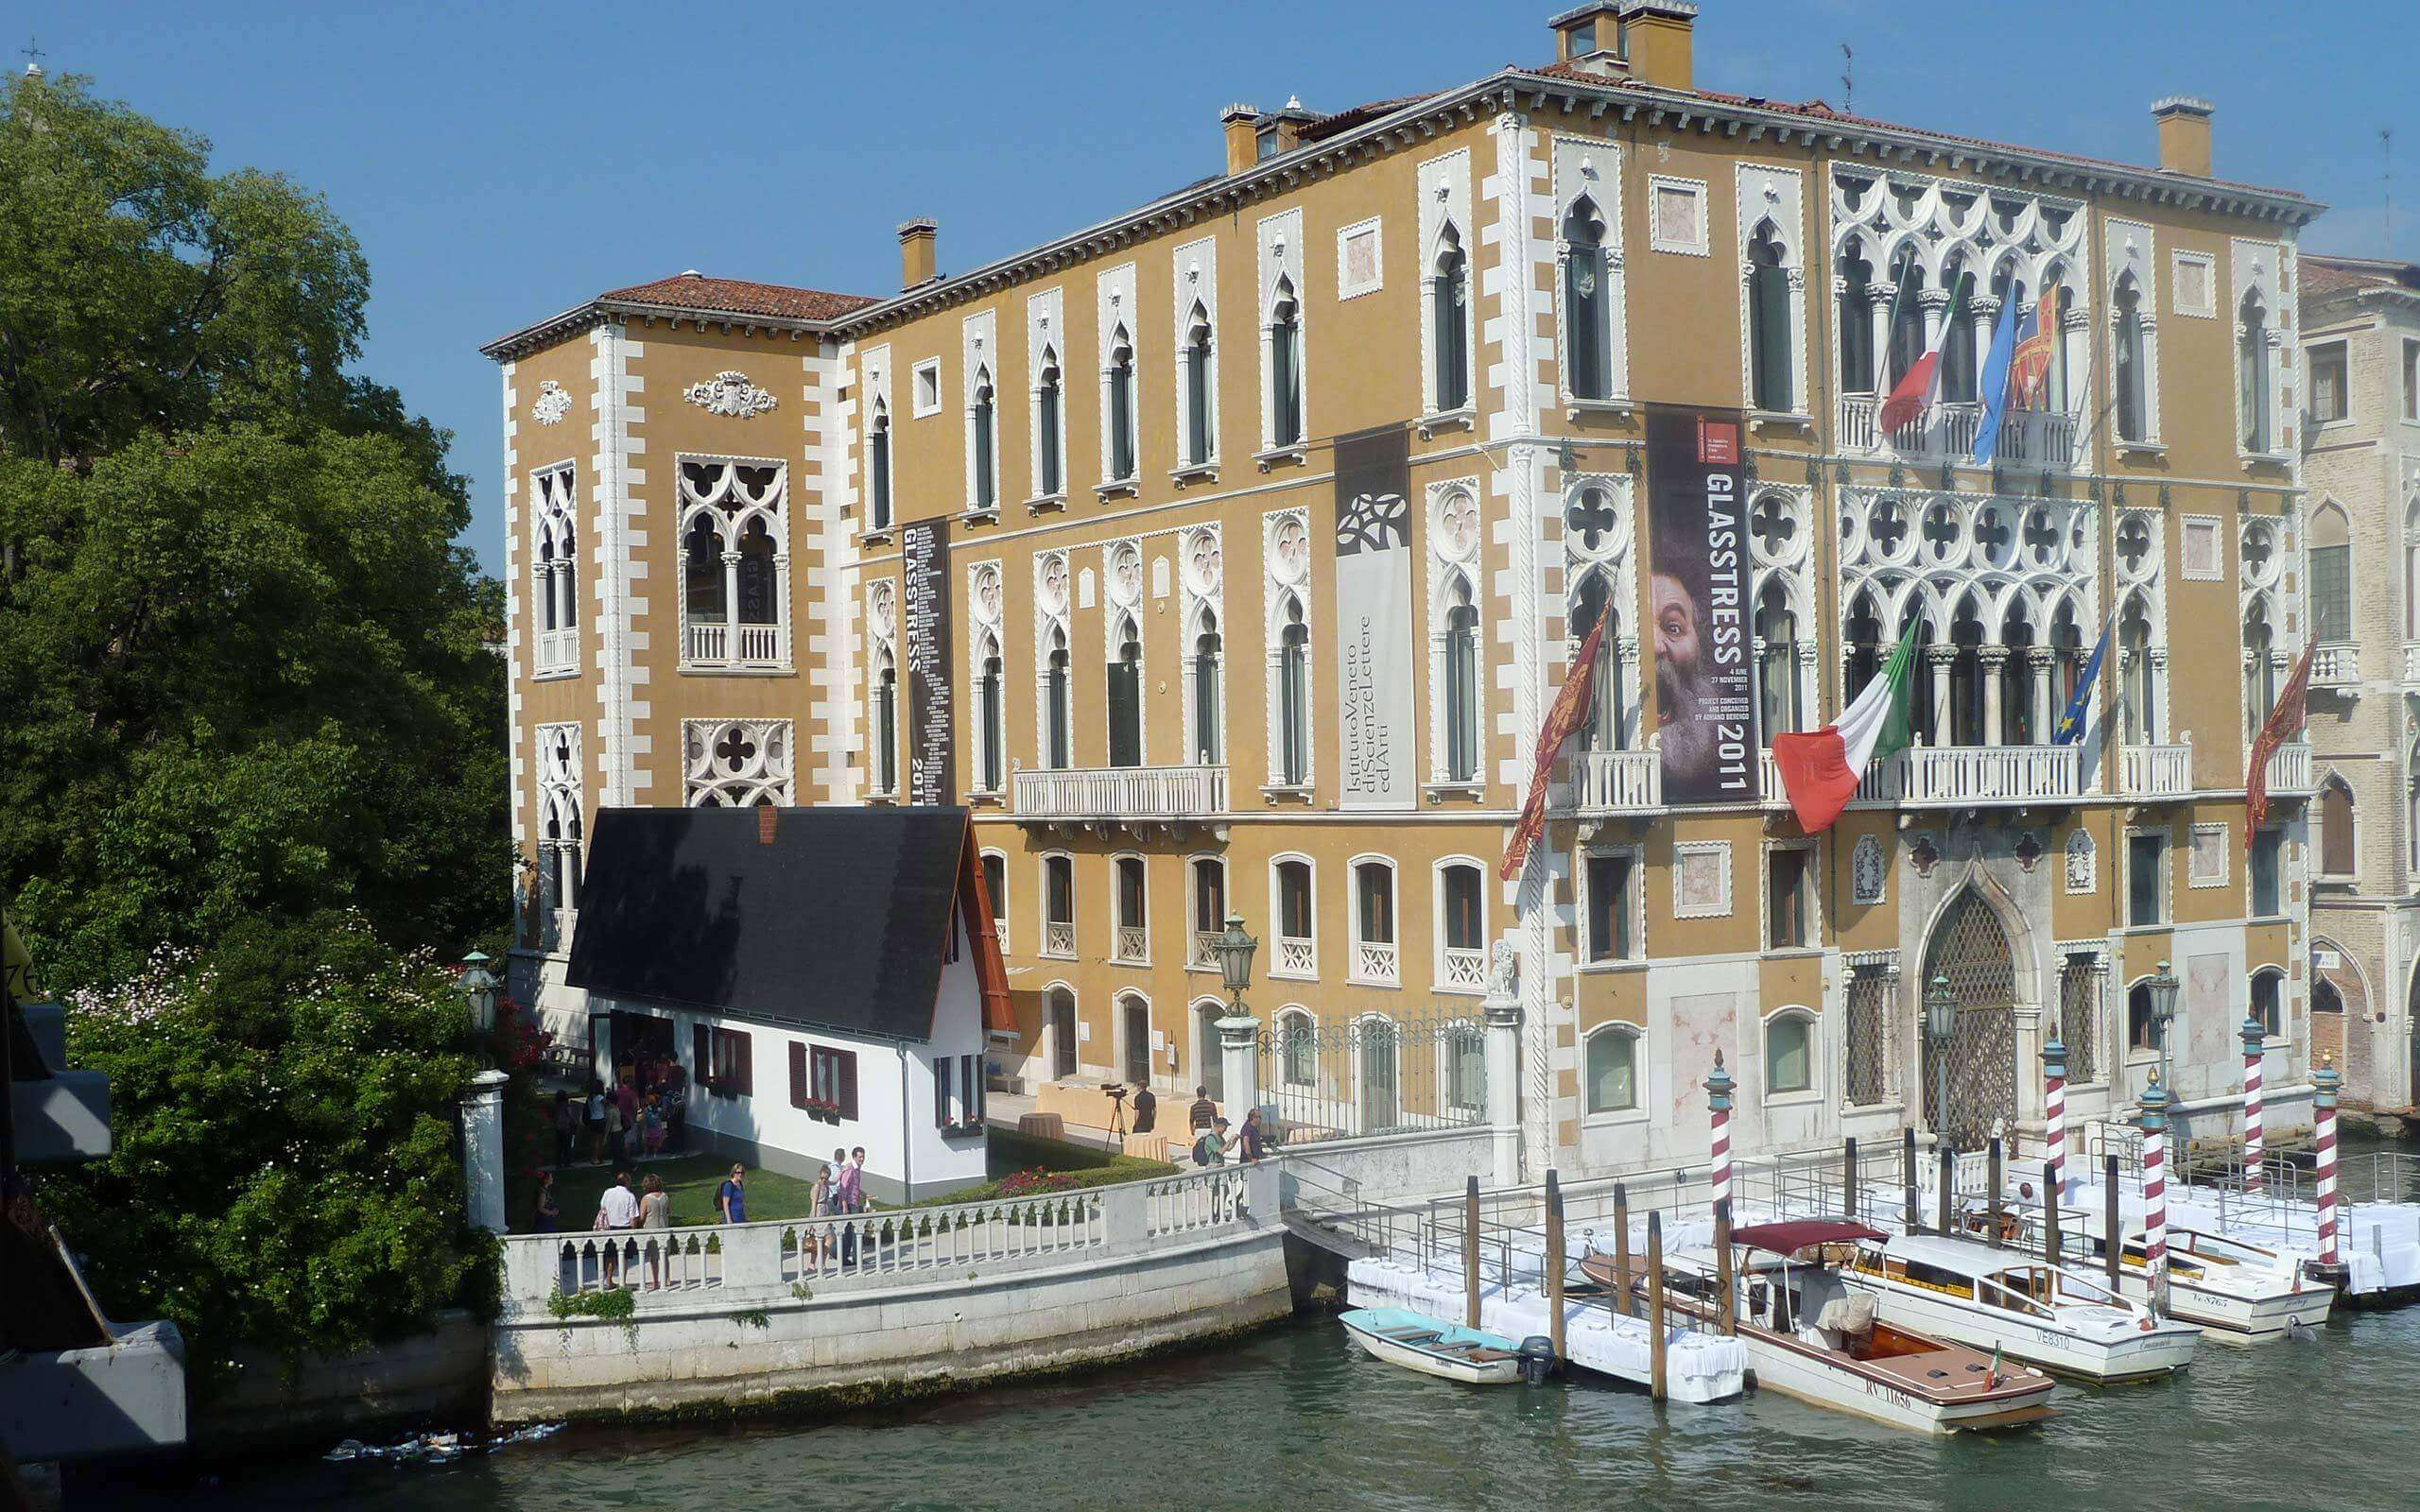 The Palazzo Cavalli-Franchetti alongside the Grand Canal